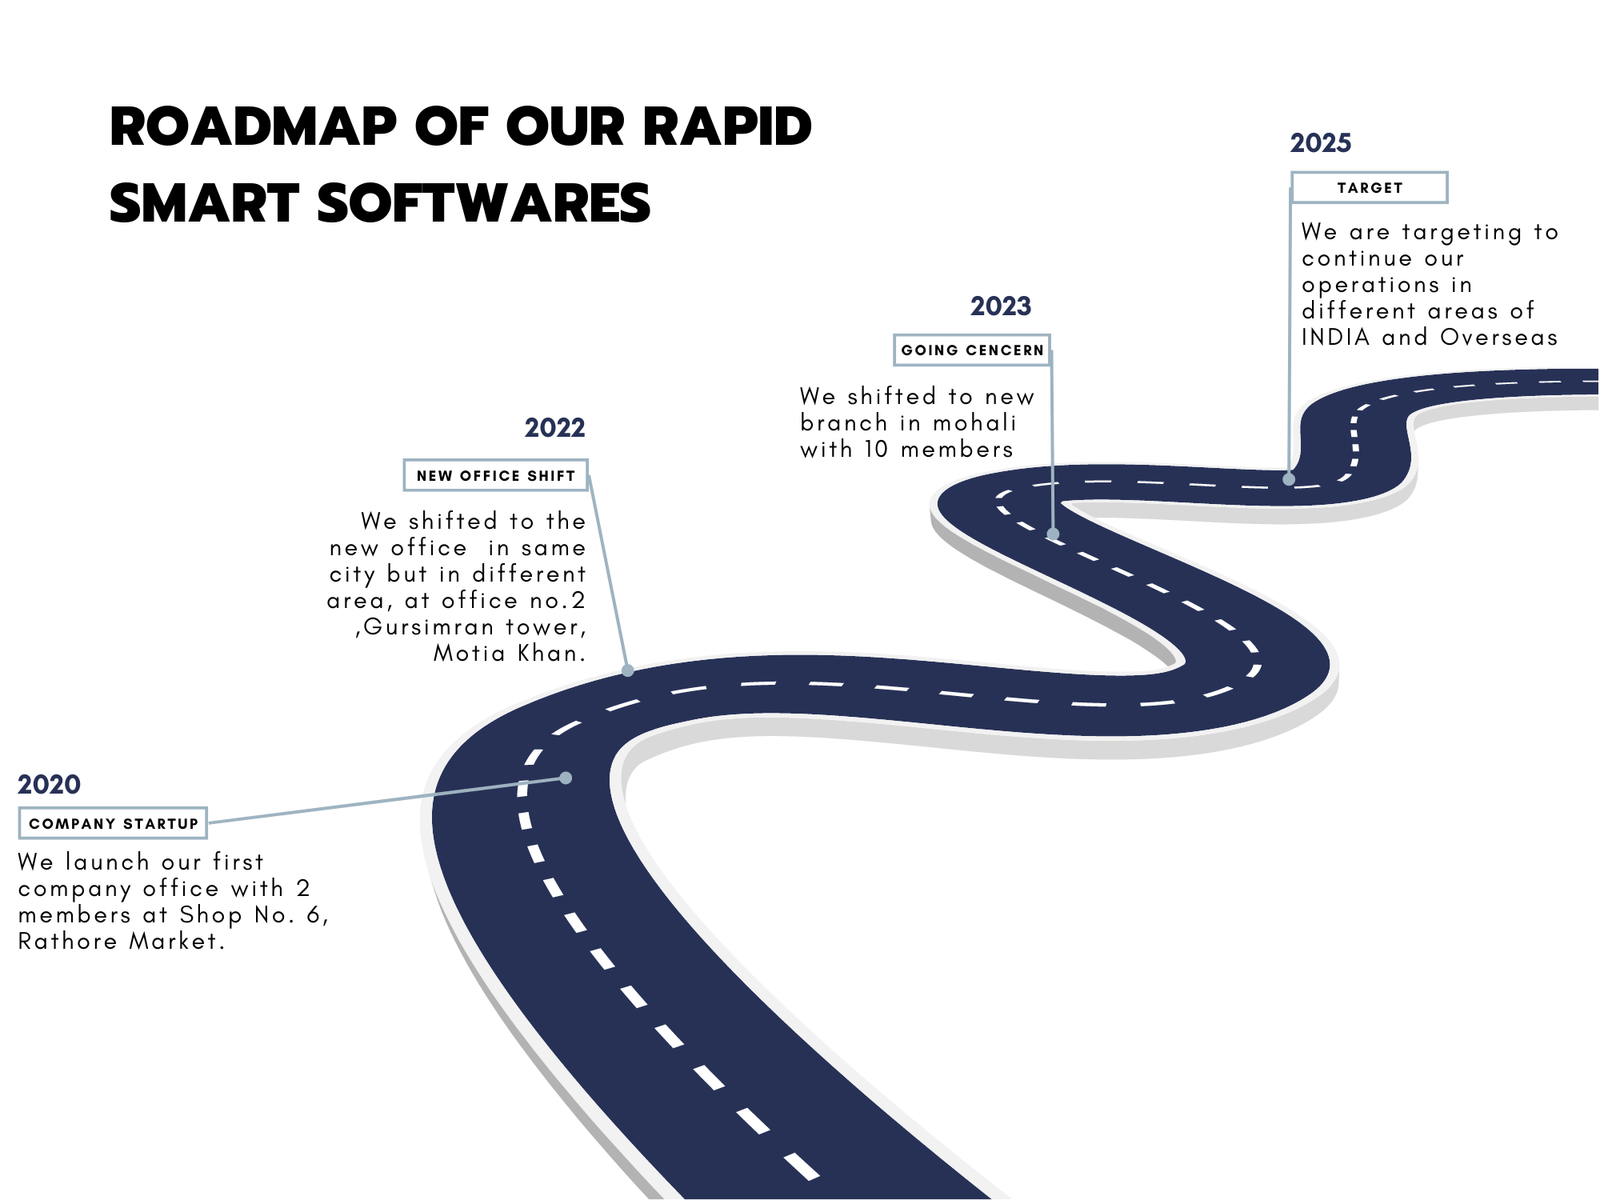 Roadmap Image